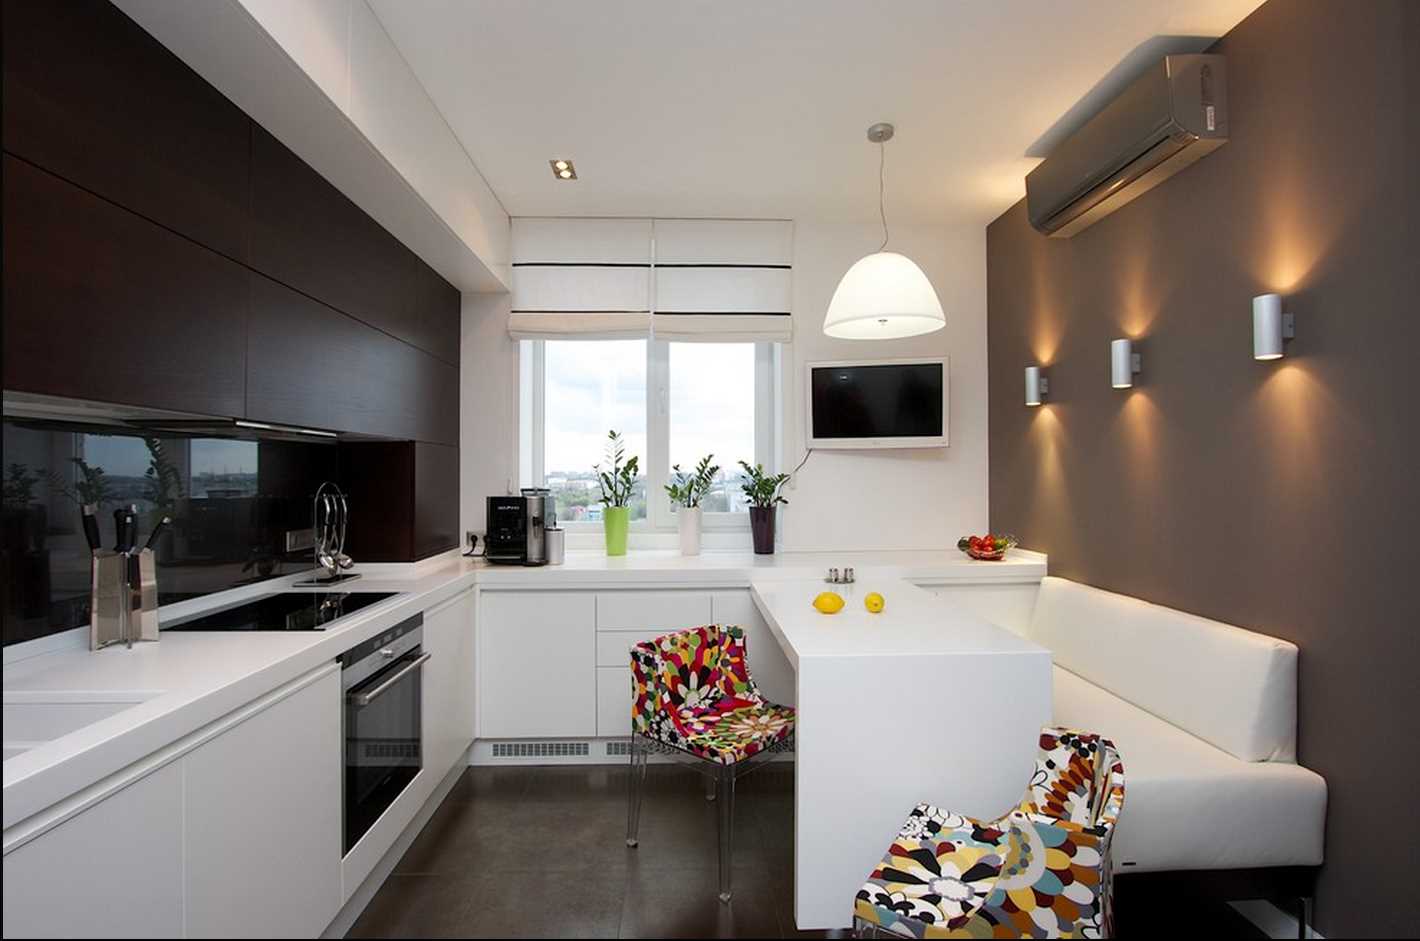 l'idée d'un design inhabituel de la cuisine est de 14 m²